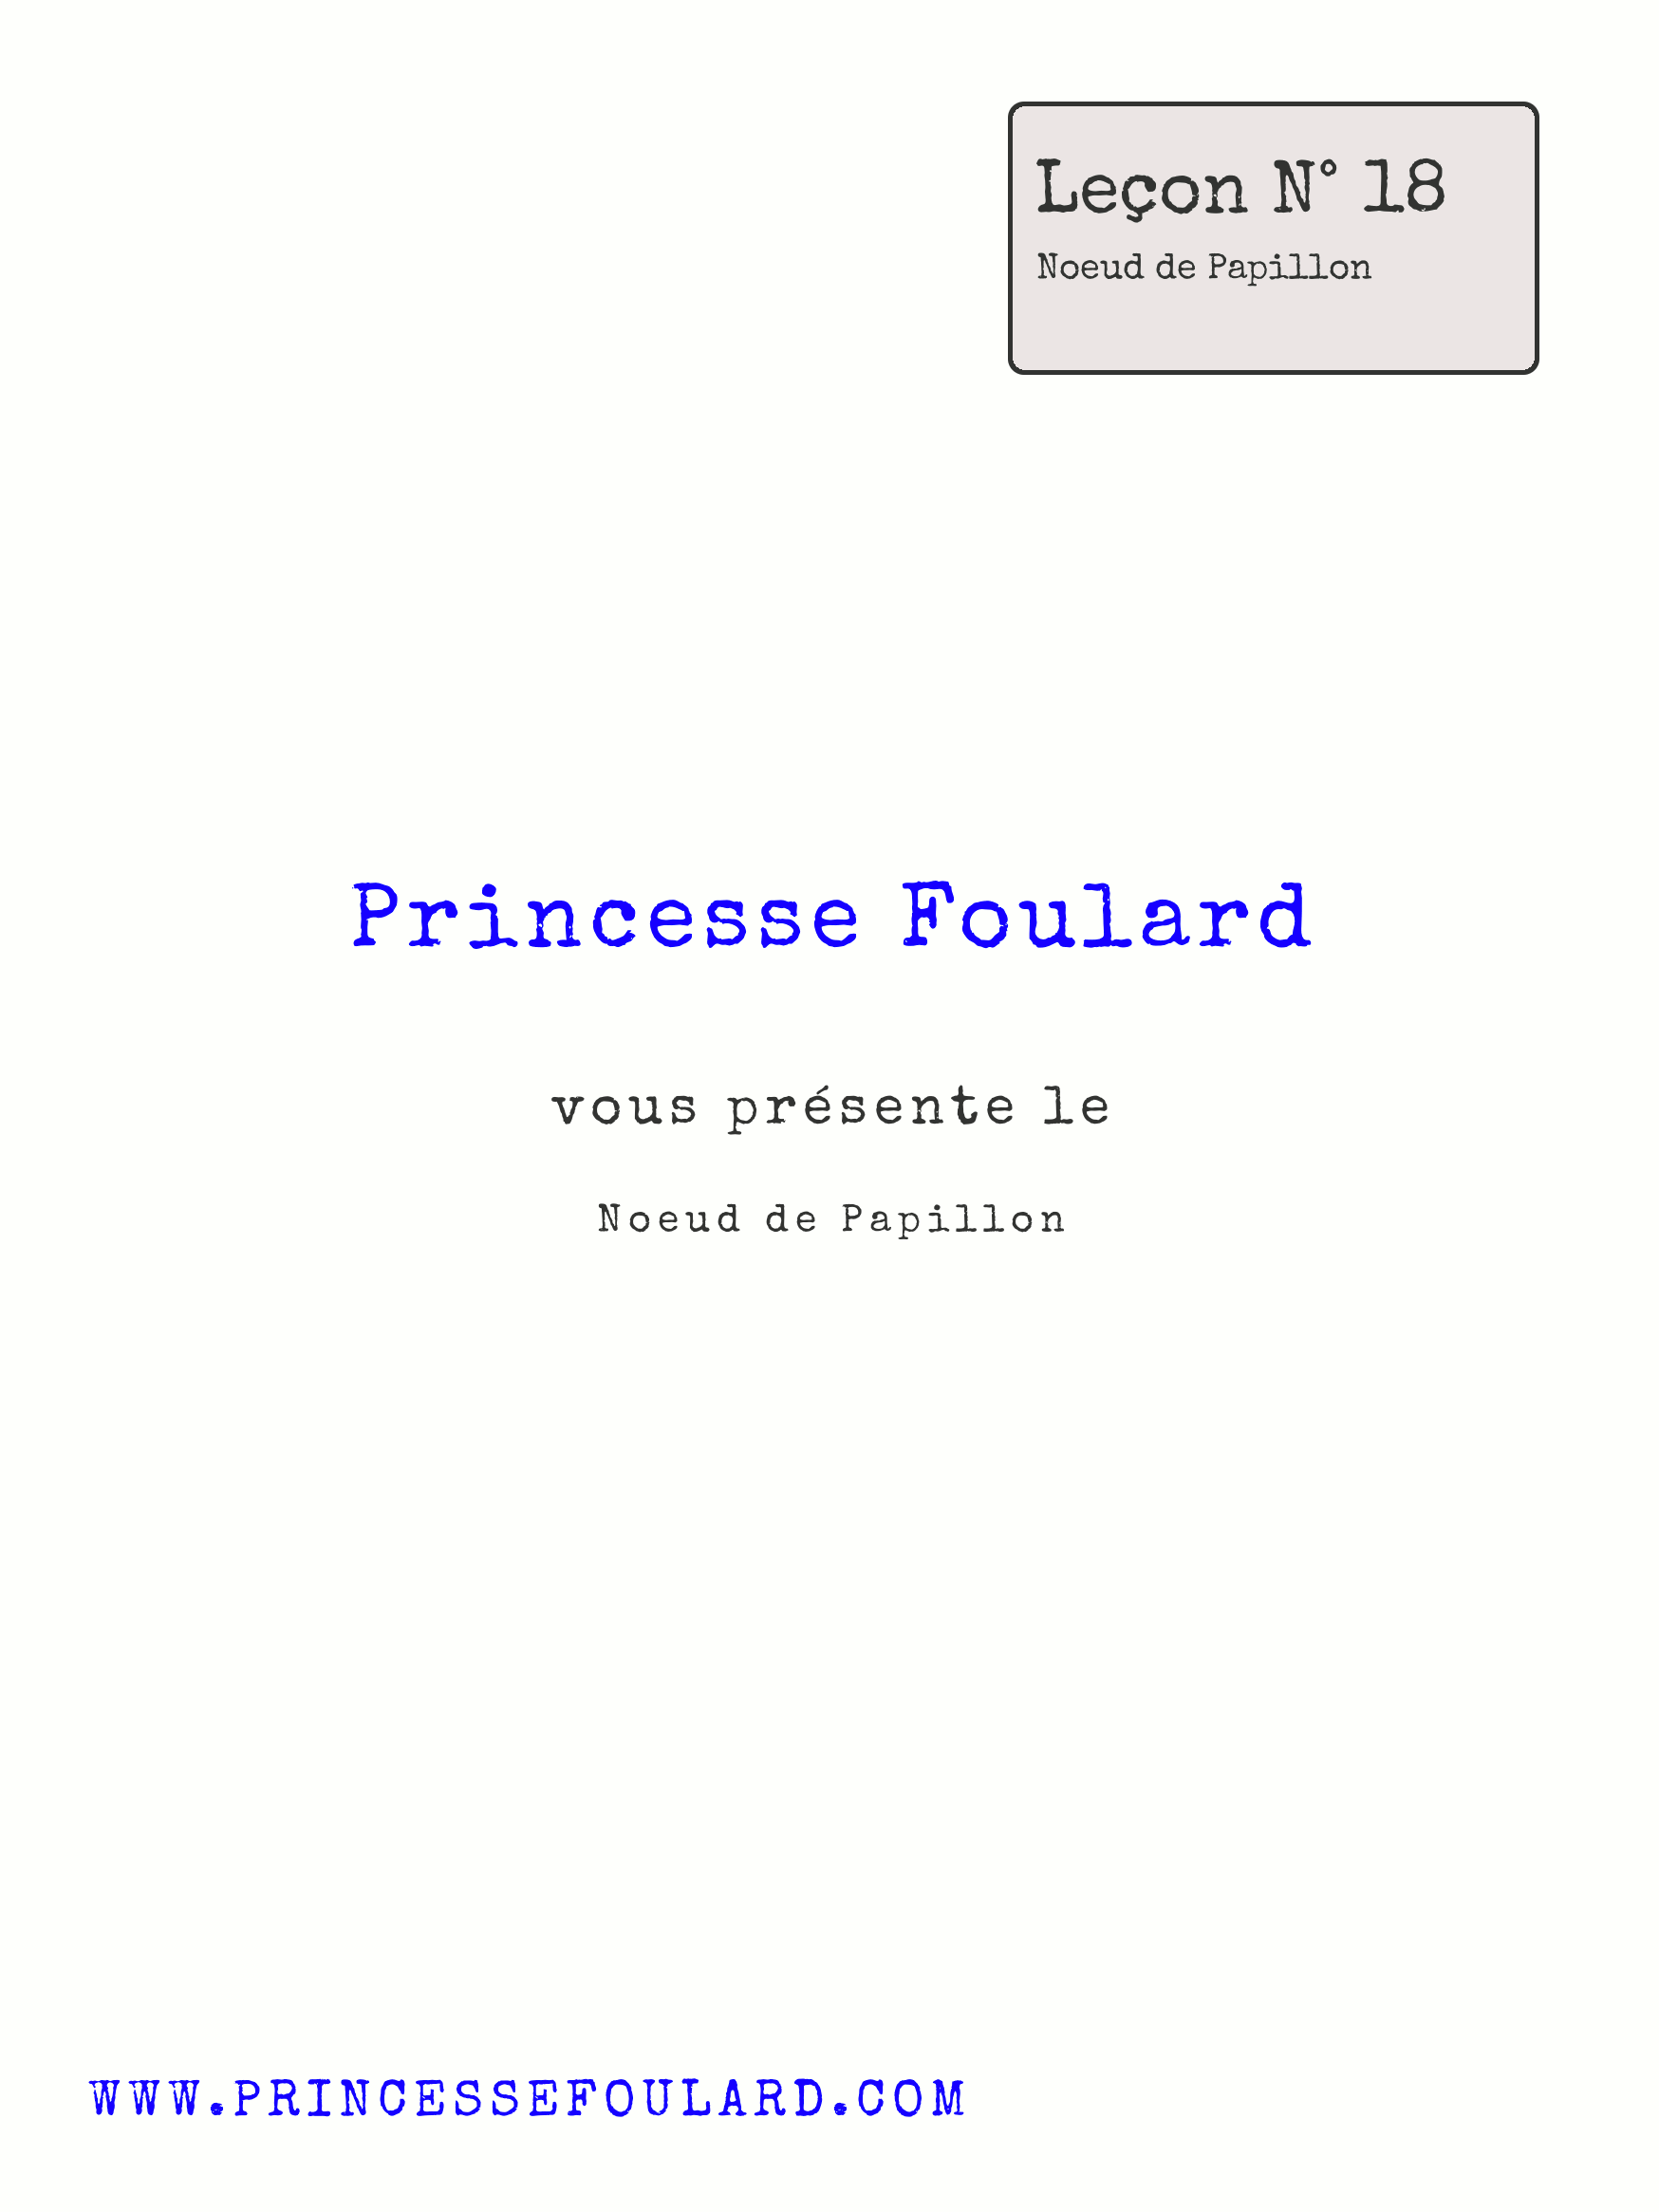 Tuto Noeud de Foulard papillon par "Princesse Foulard"